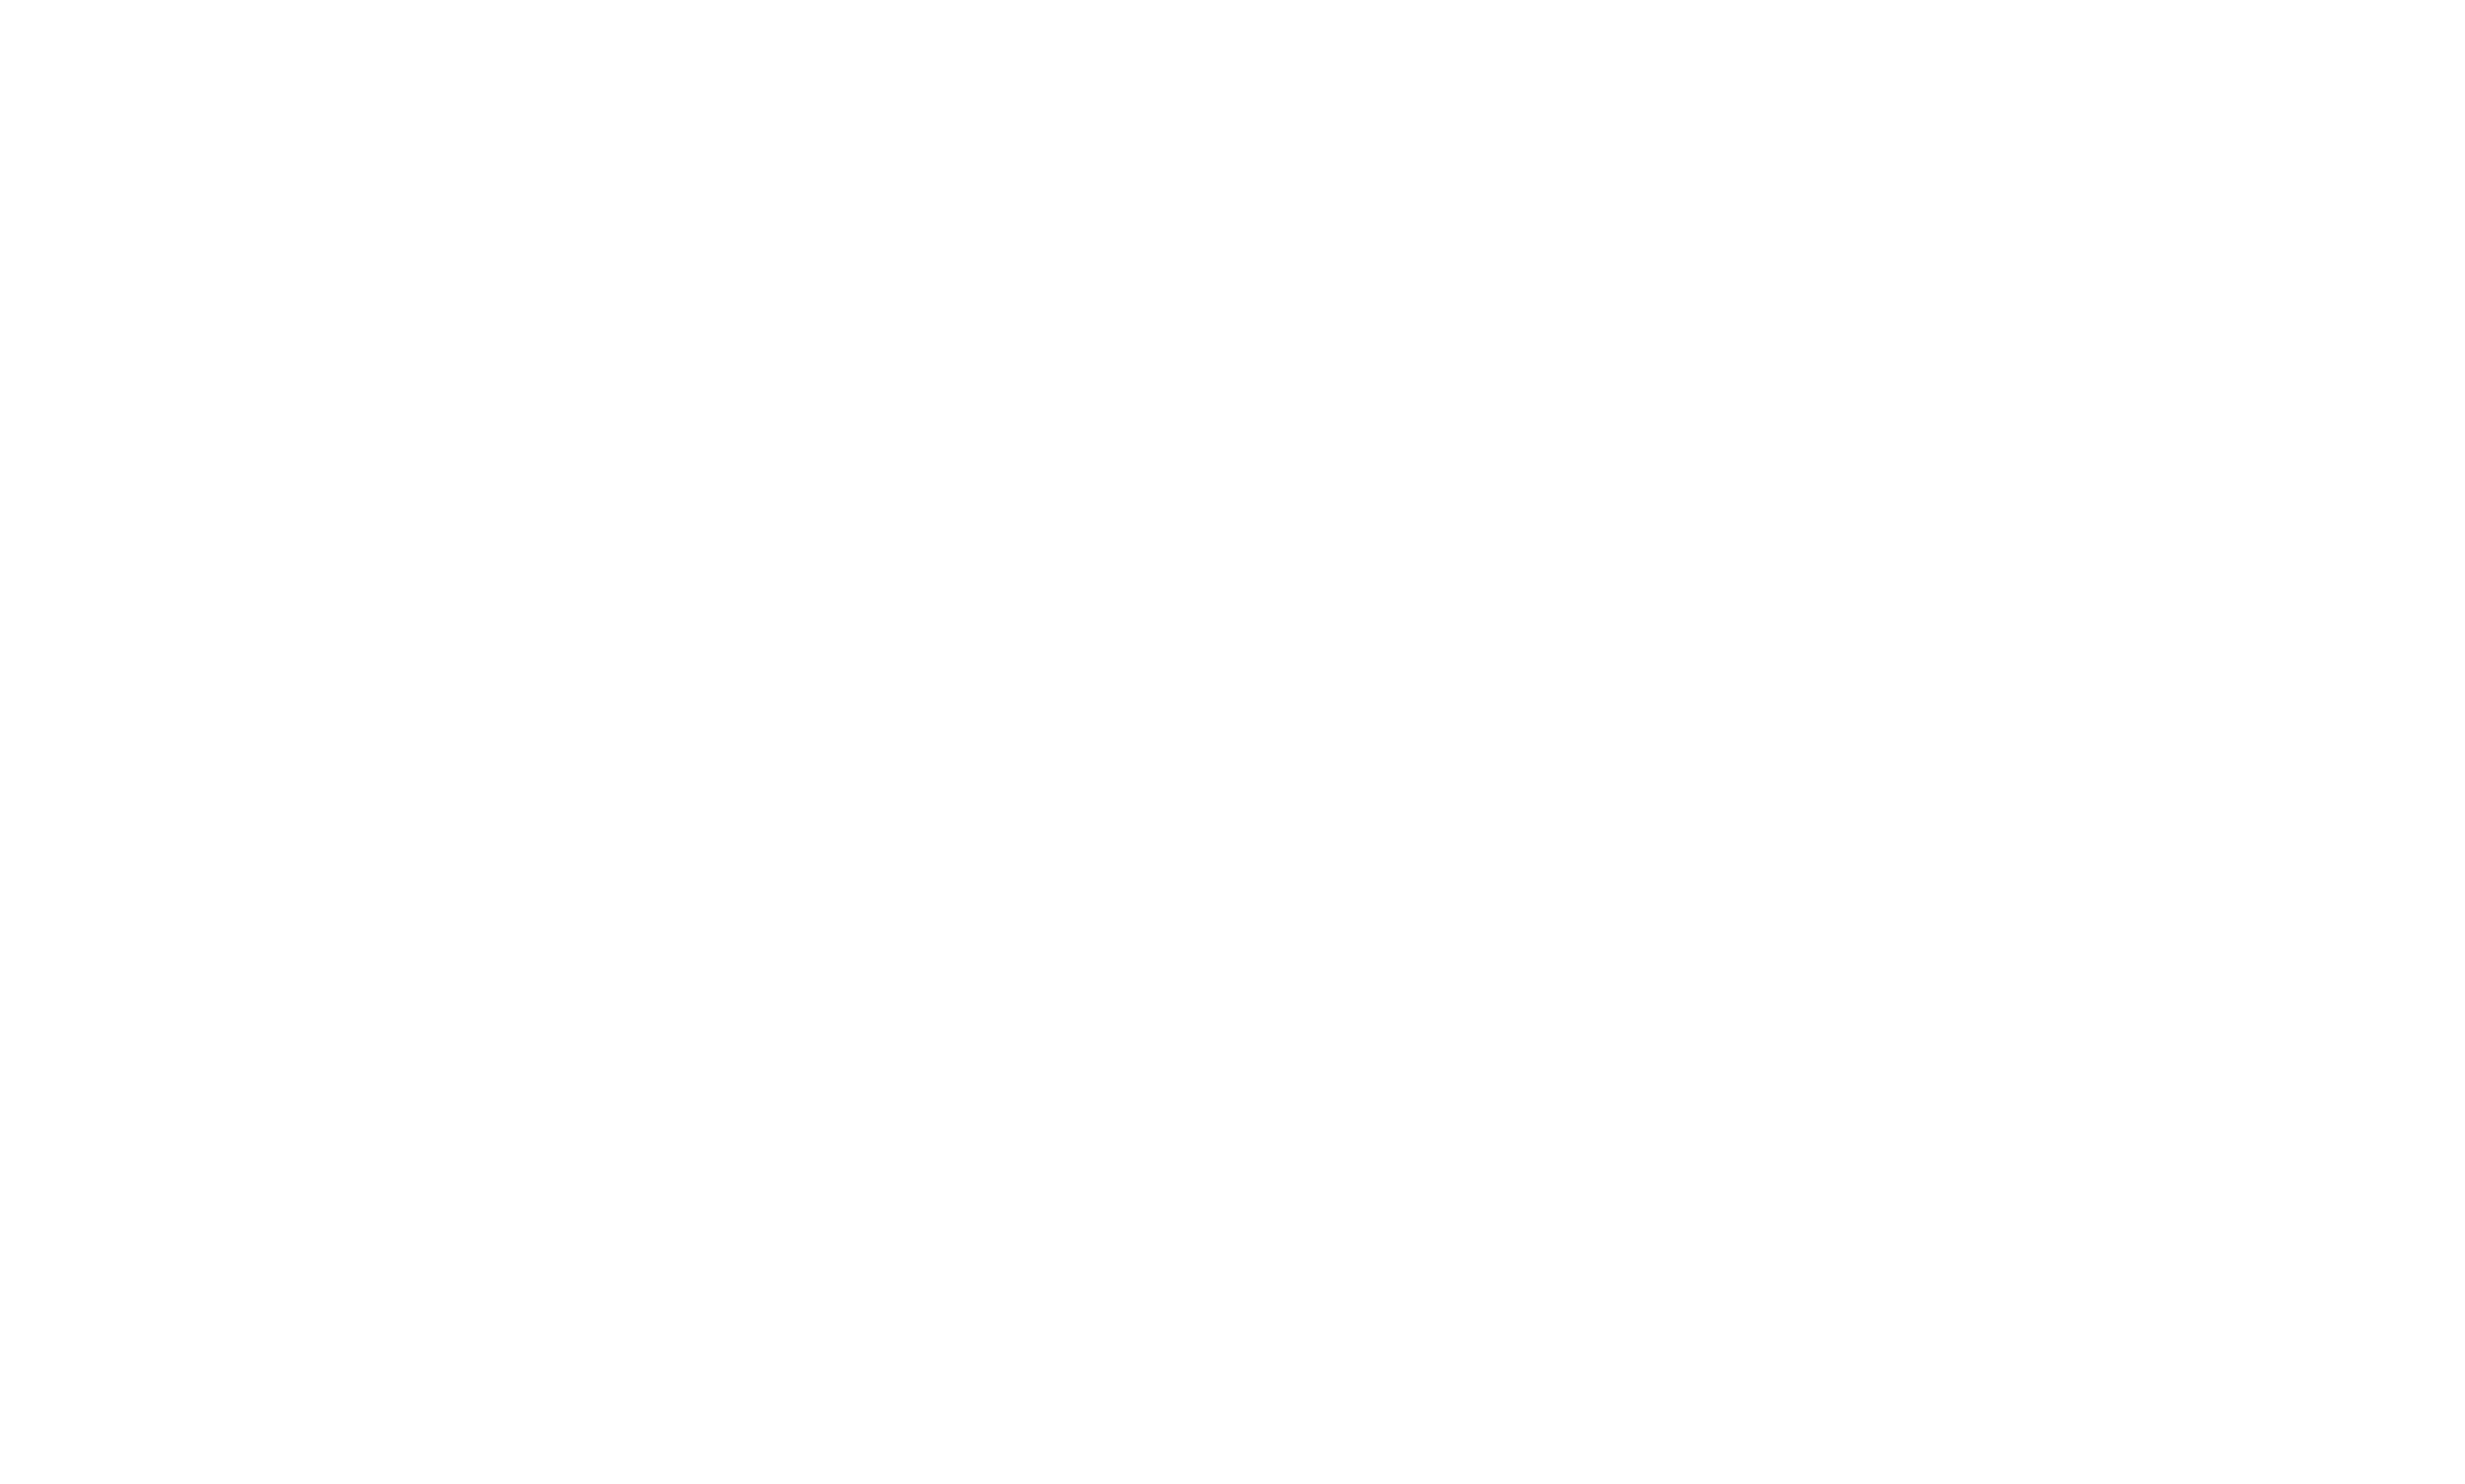 Humane Society of Cedar Creek Lake | 